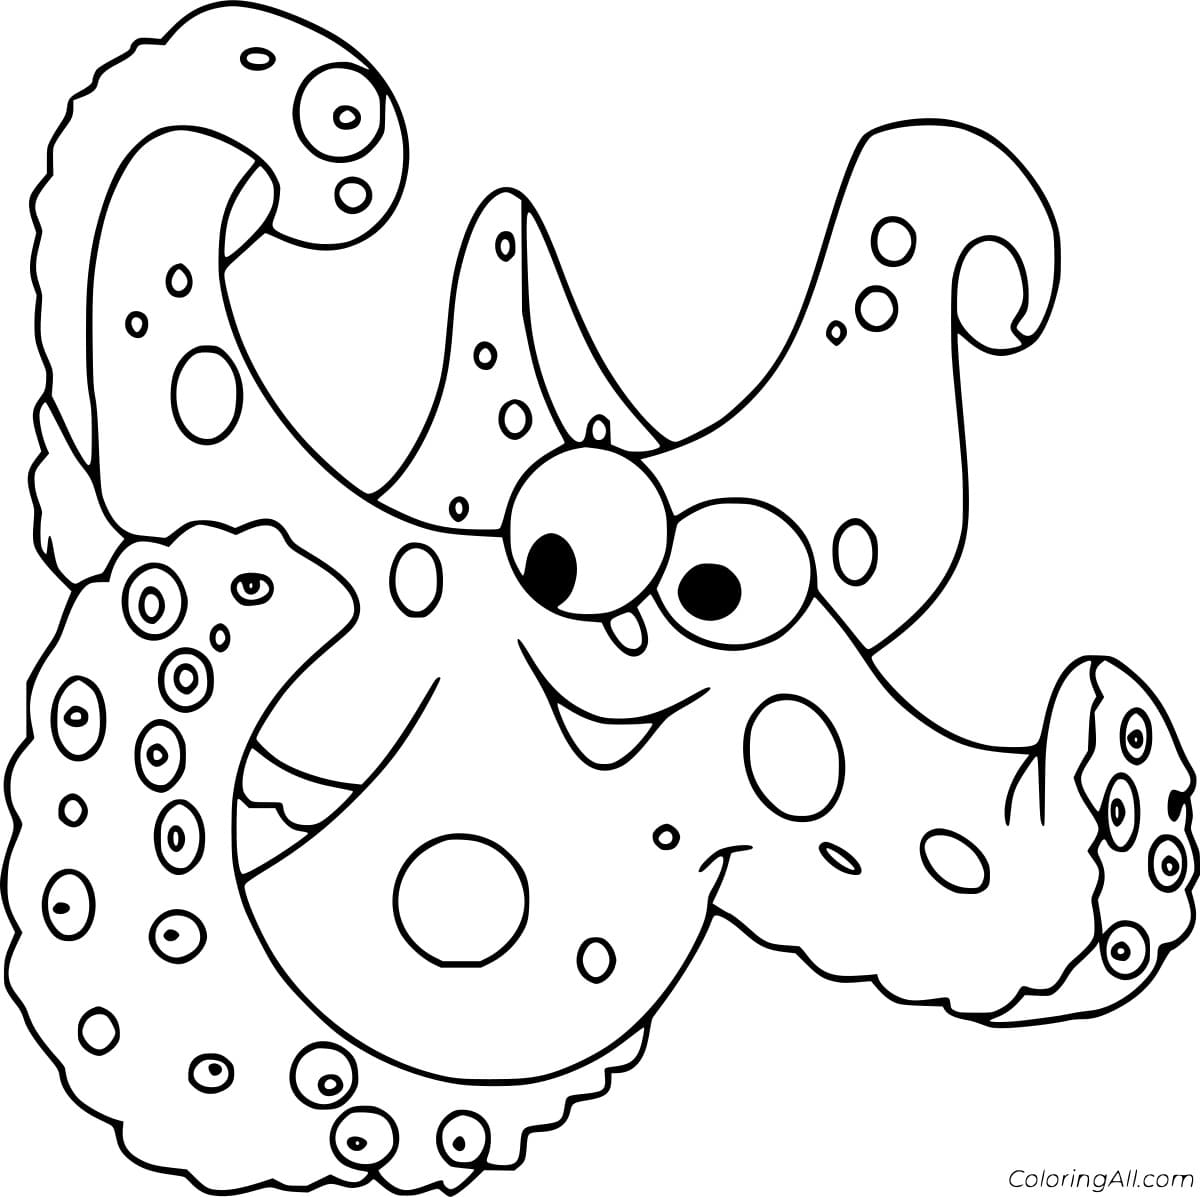 Cartoon Starfish Image Coloring Page